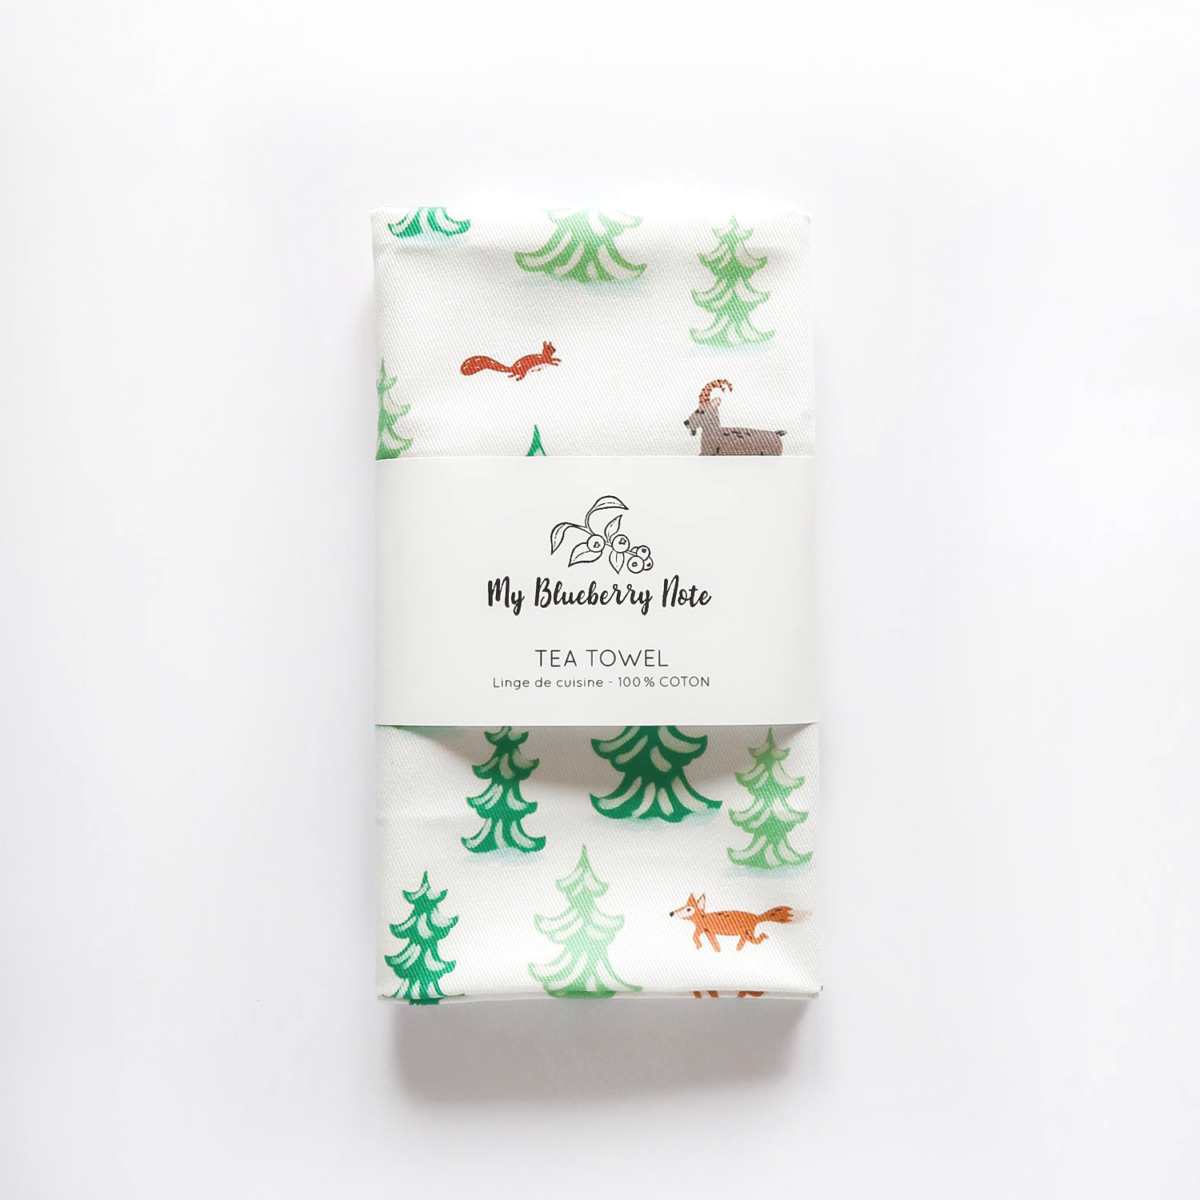 Tea towel forest packaging